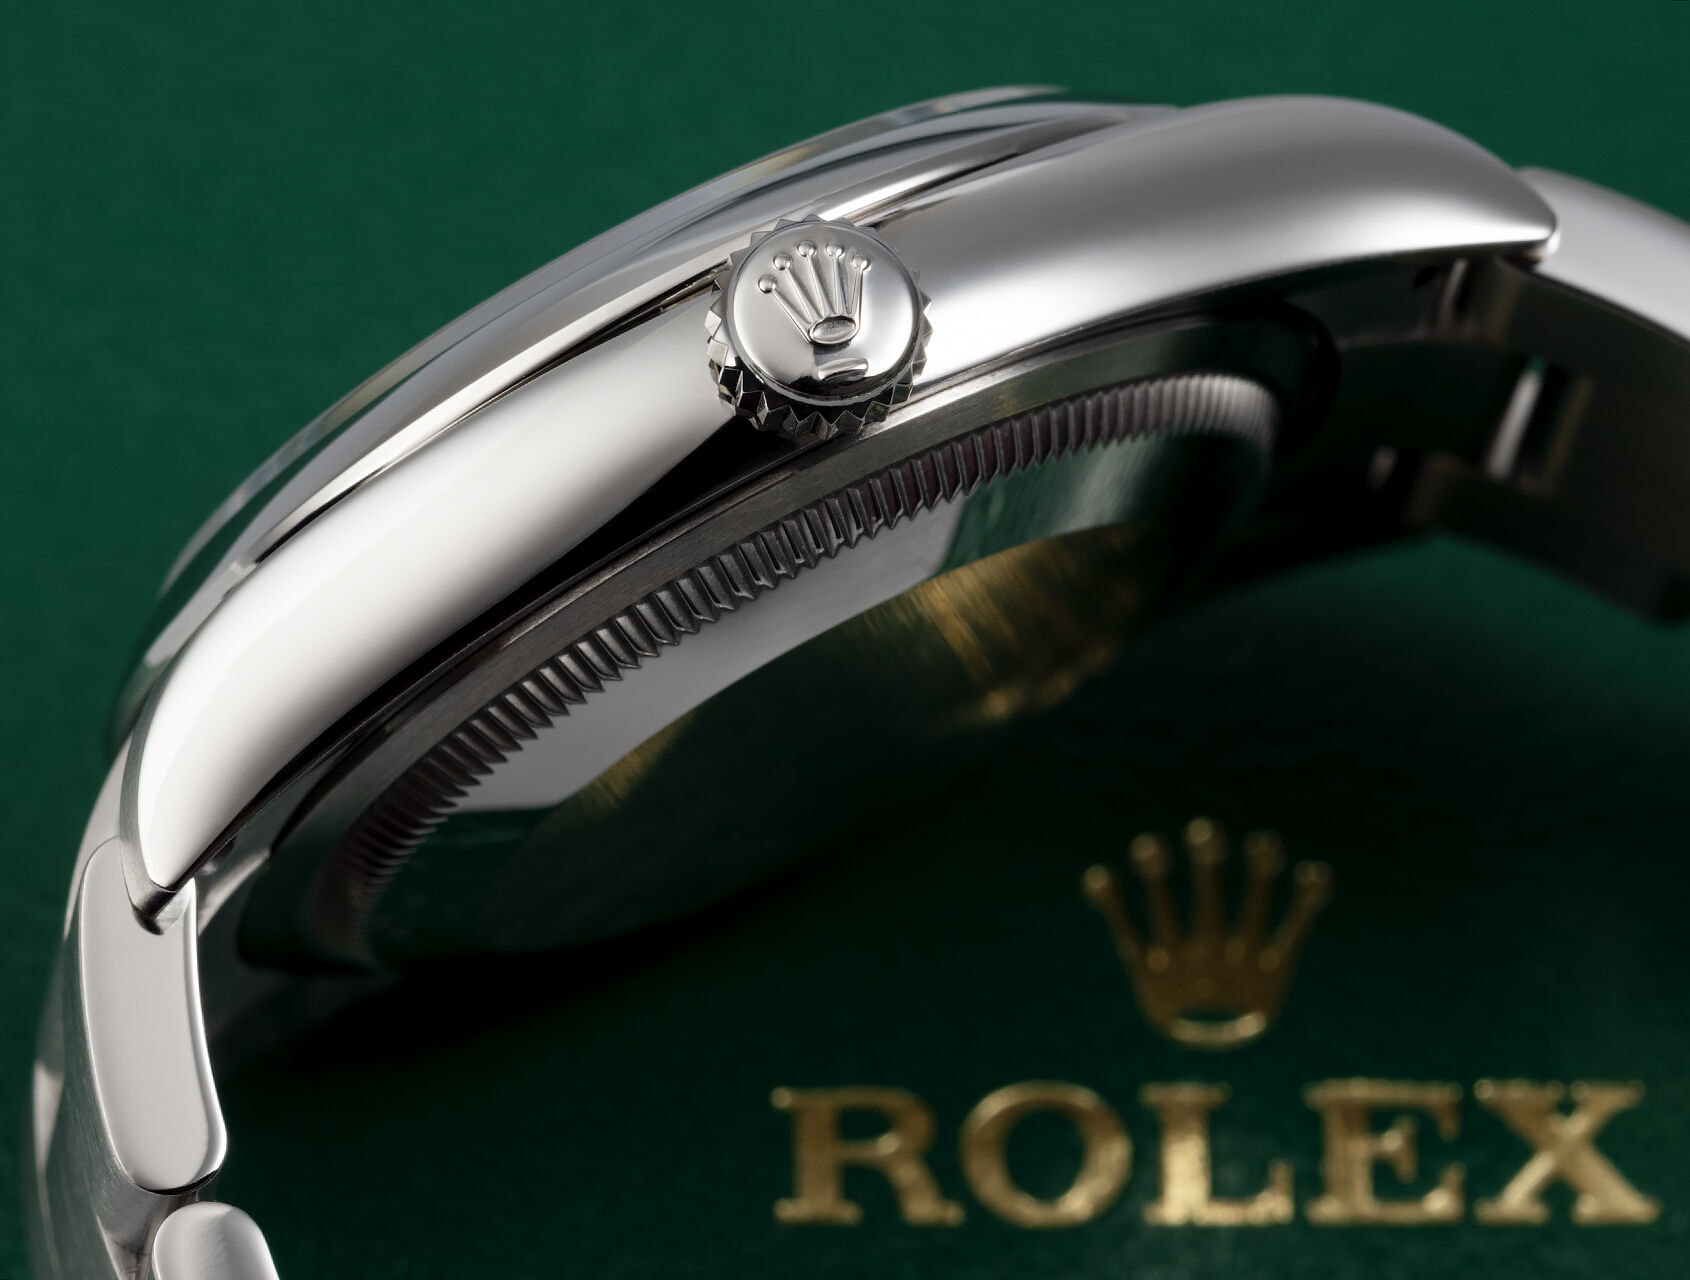 ref 126000 | 126000 - Bright Blue | Rolex Oyster Perpetual